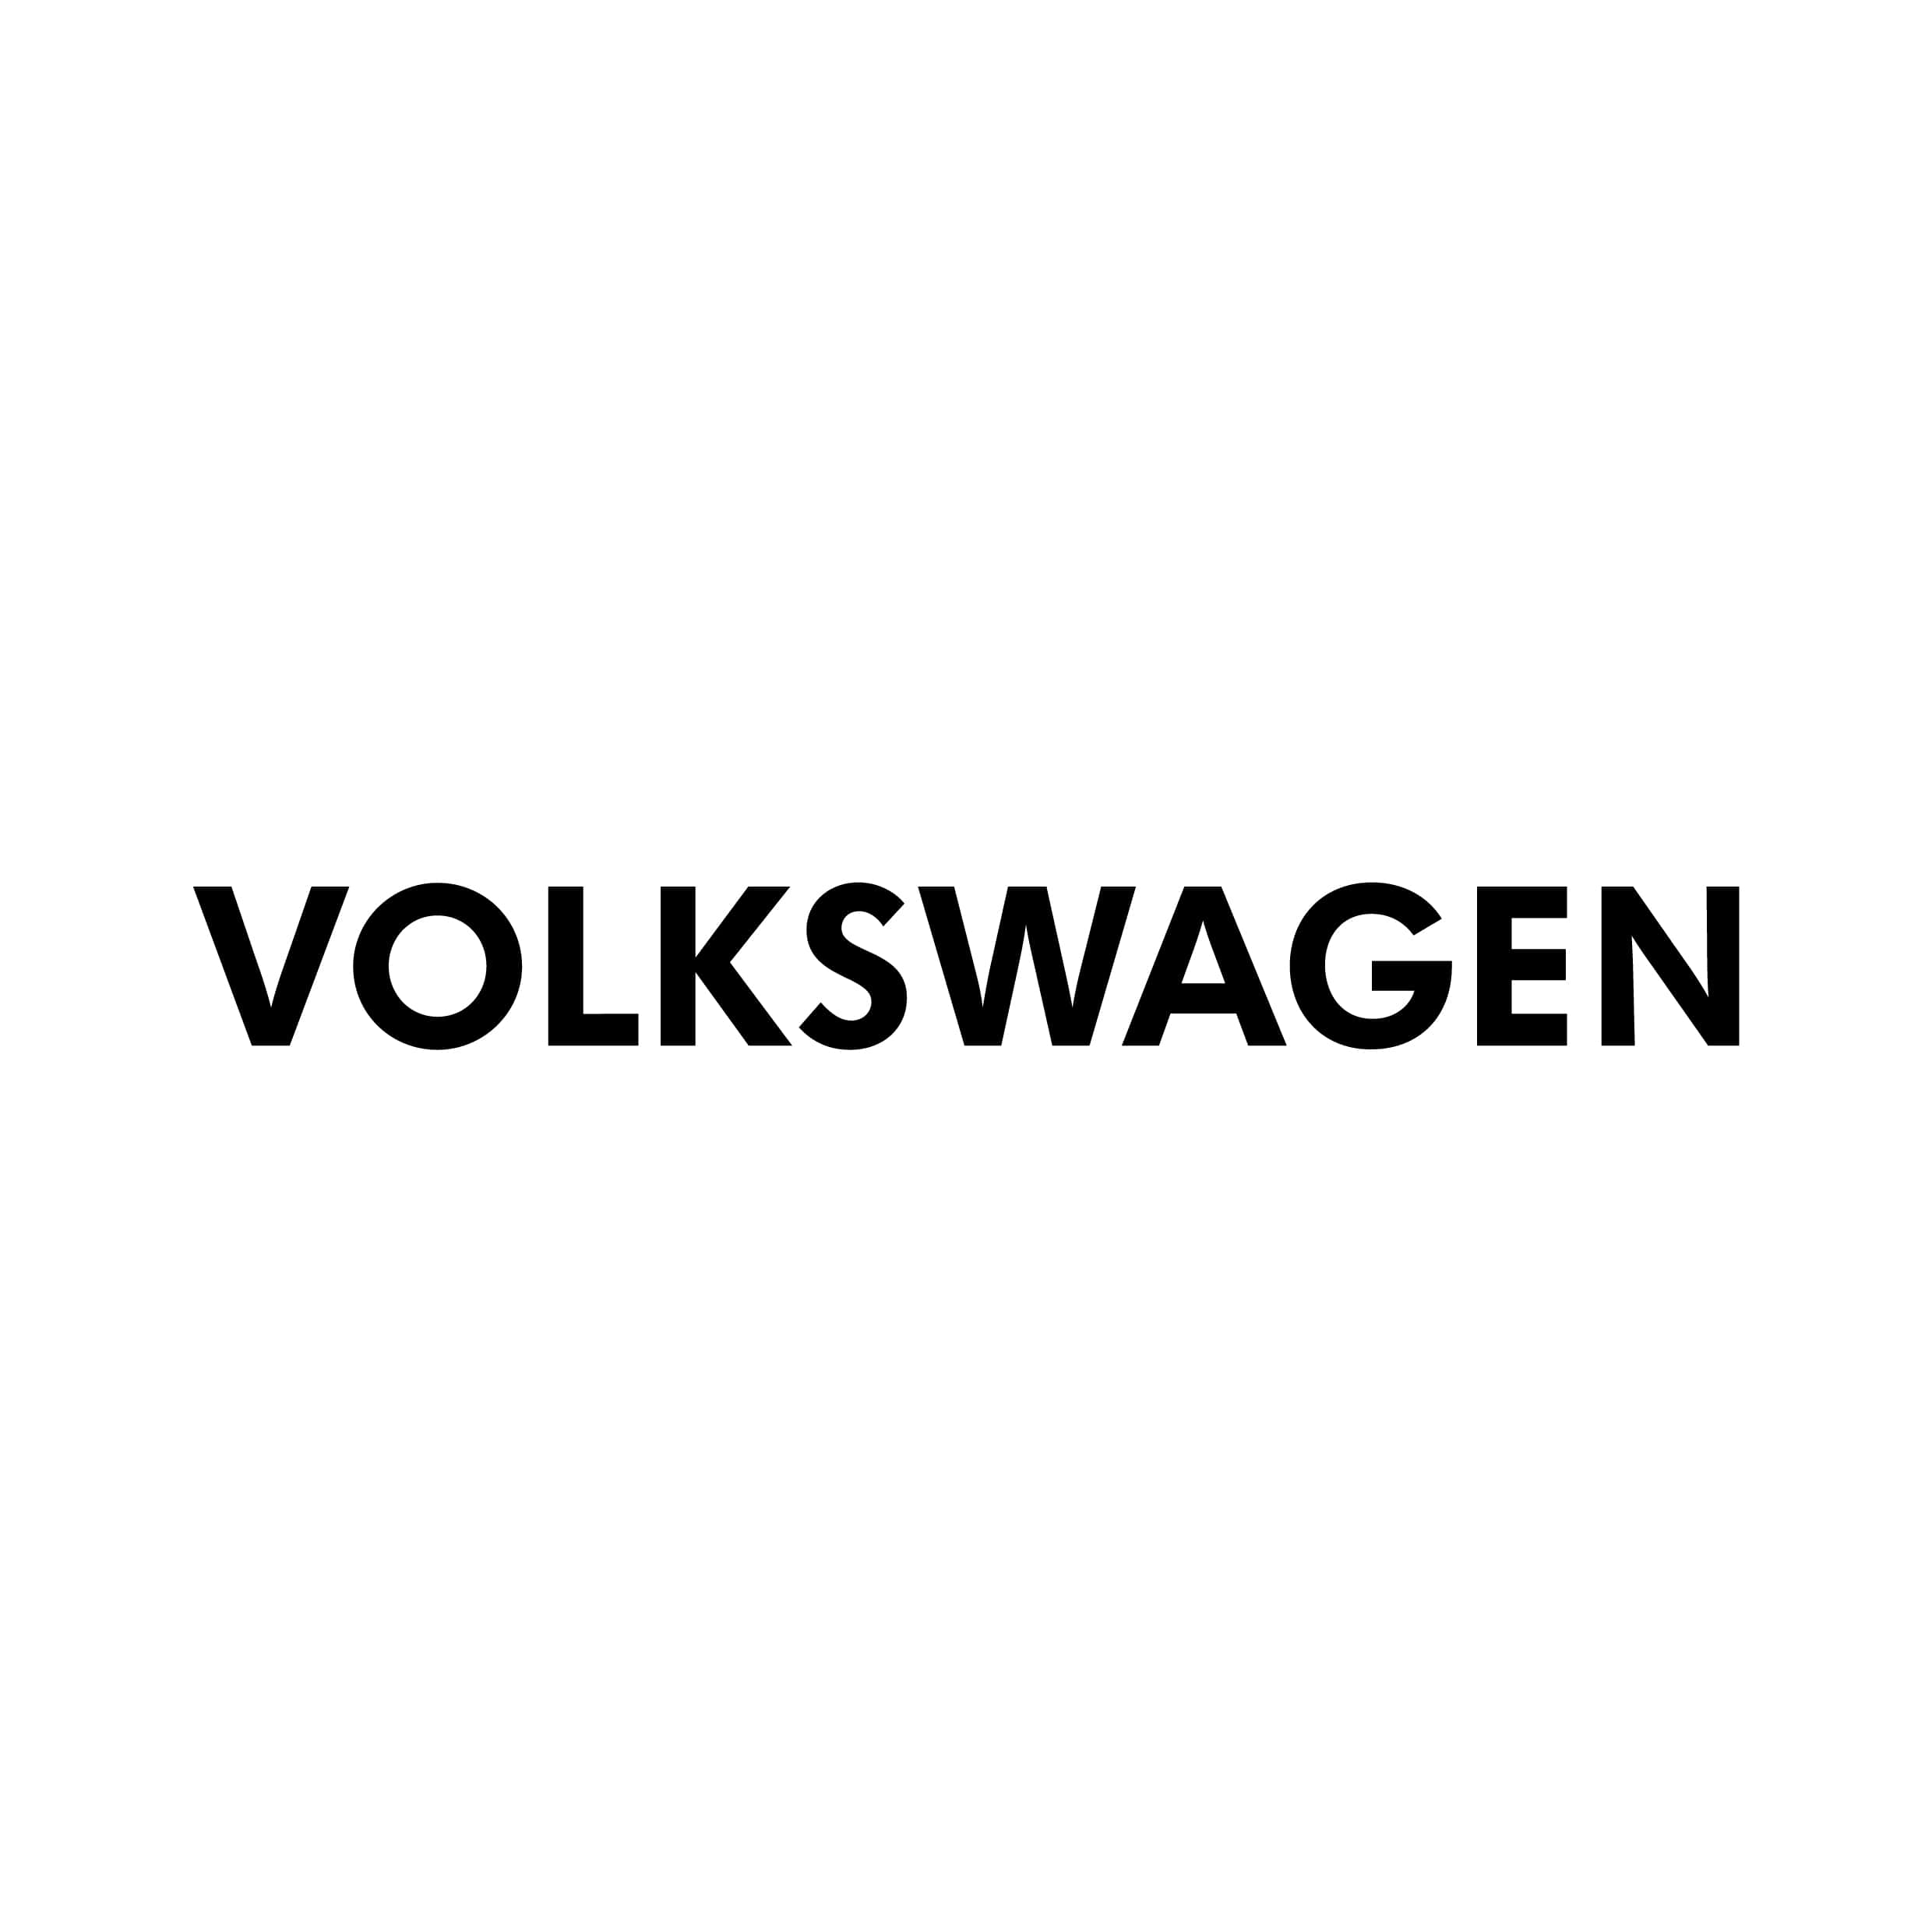 stickers-volkswagen-ref12-autocollant-voiture-sticker-auto-autocollants-decals-sponsors-racing-tuning-sport-logo-min